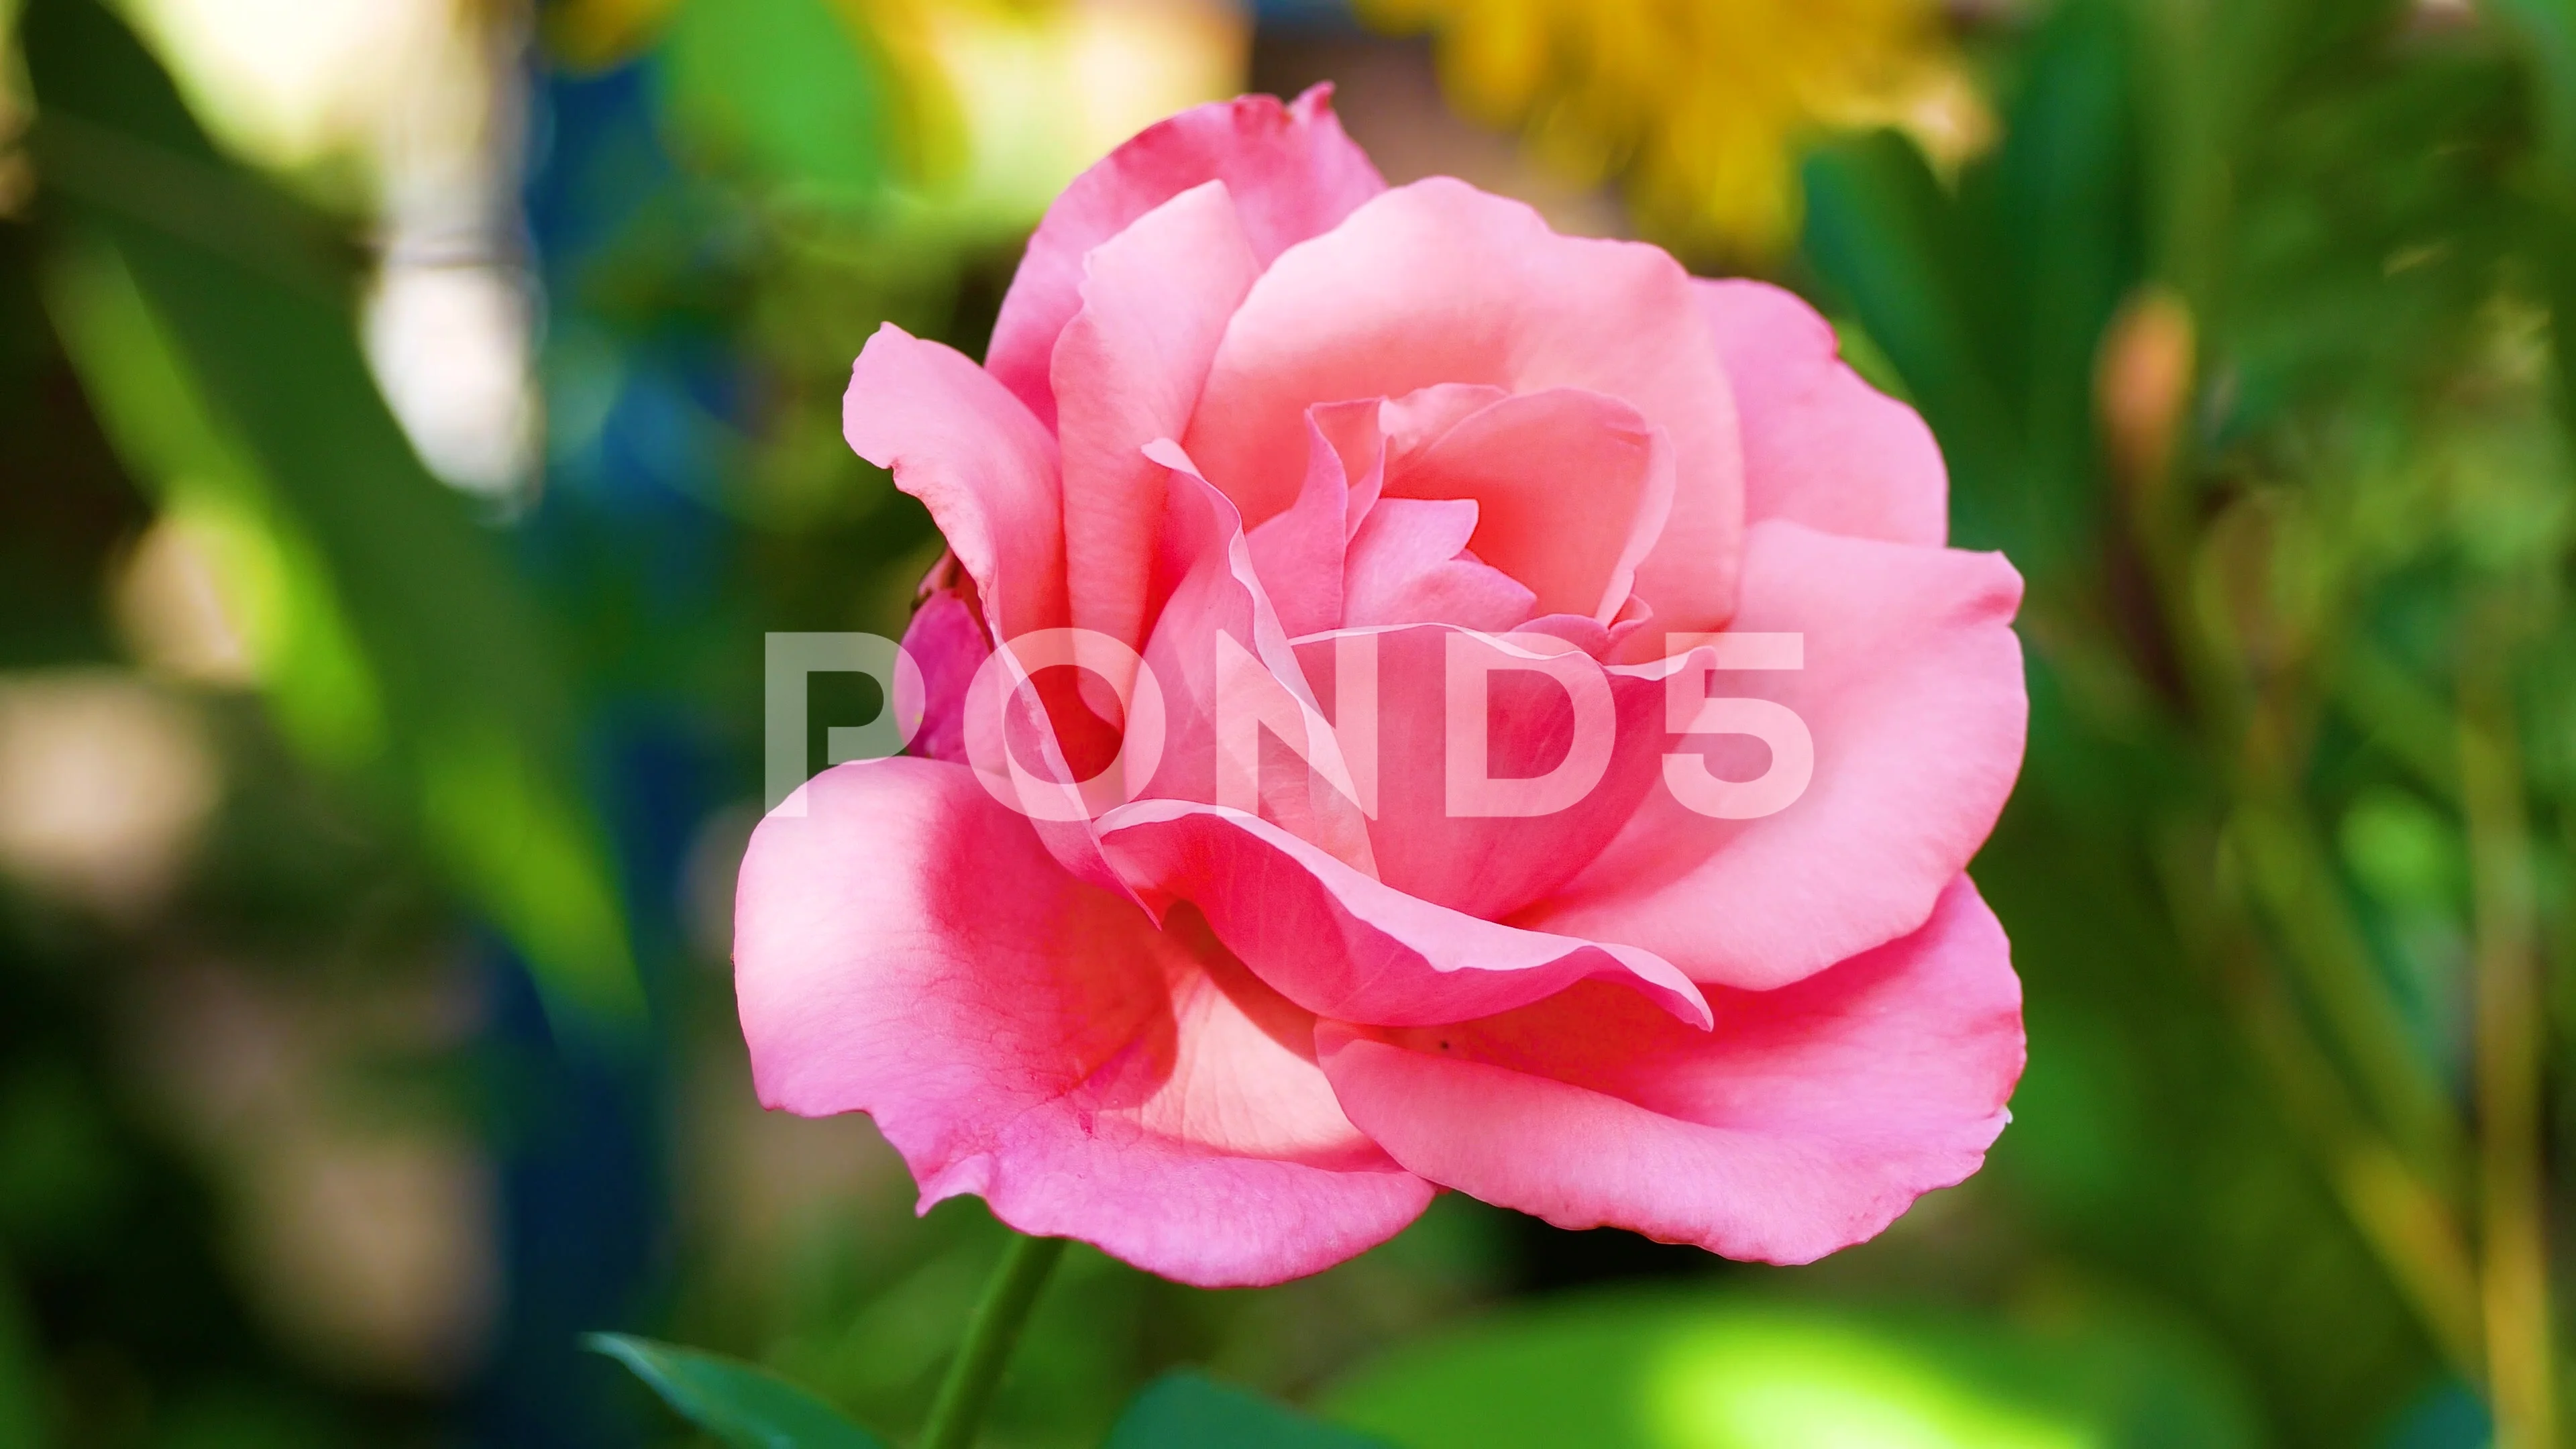 pink rose flower in full bloom zoomed in. petals of rose